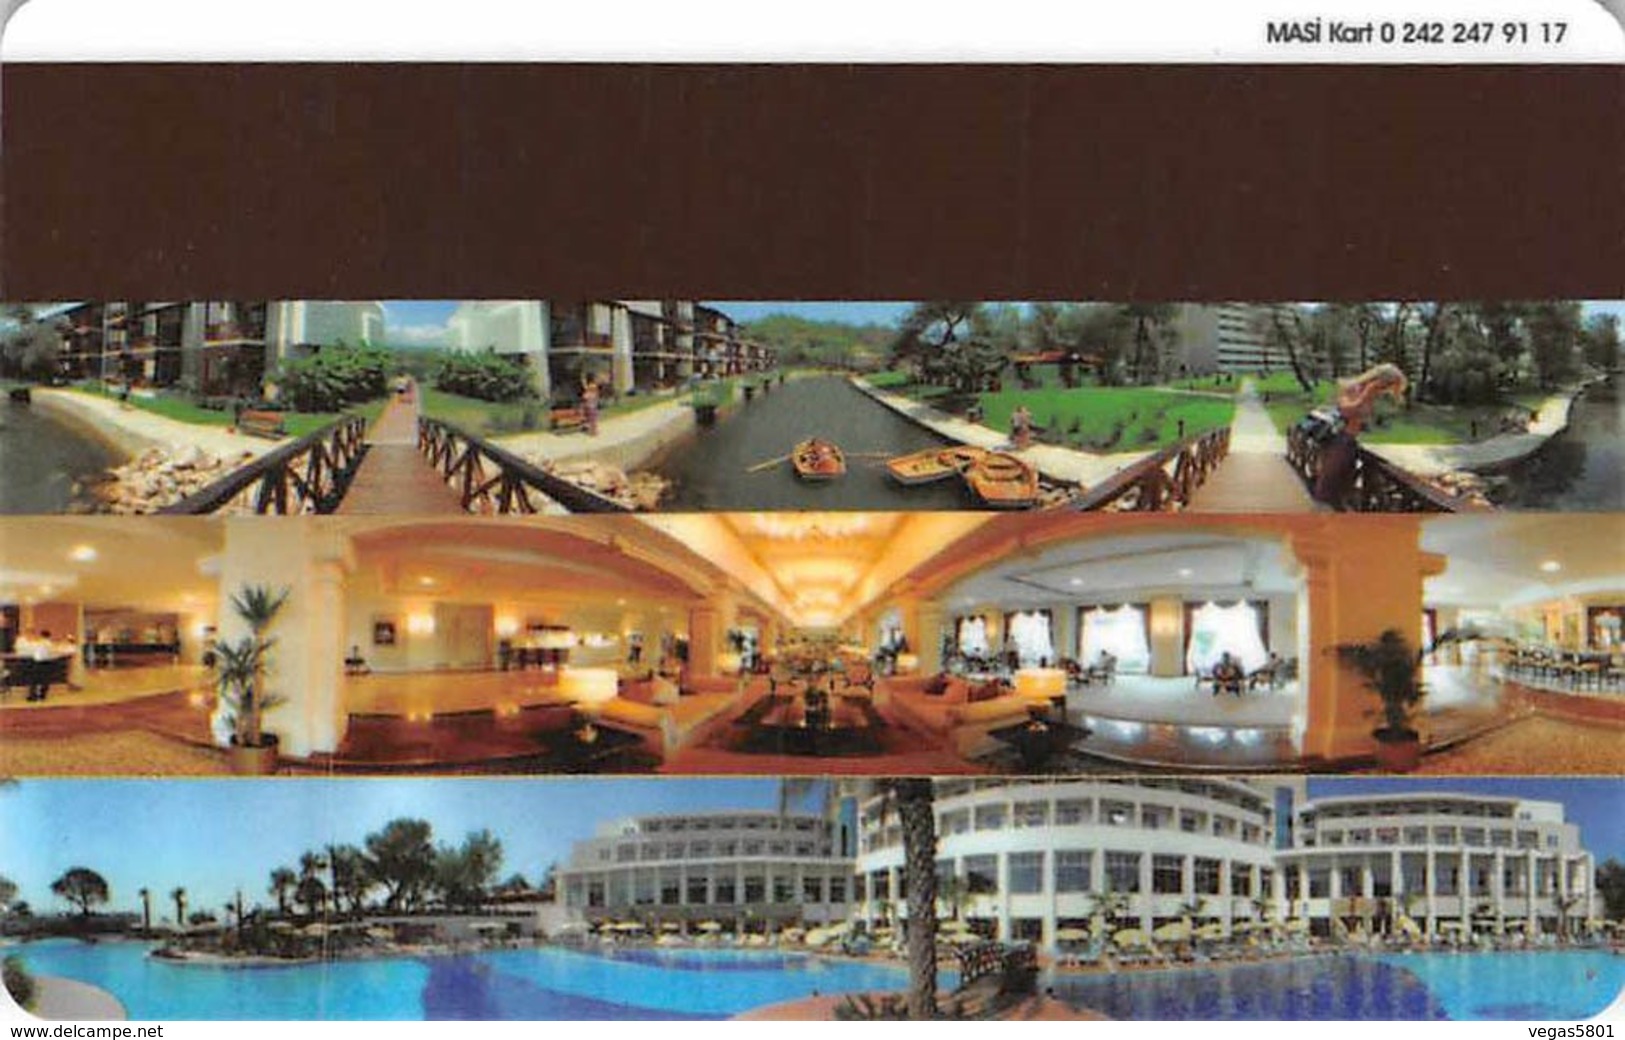 RIXOS Hotel Tekirova,Turkey - Hotel Room Key Card, Hotelkarte, Schlüsselkarte, Clé De L'Hôtel - Hotelkarten